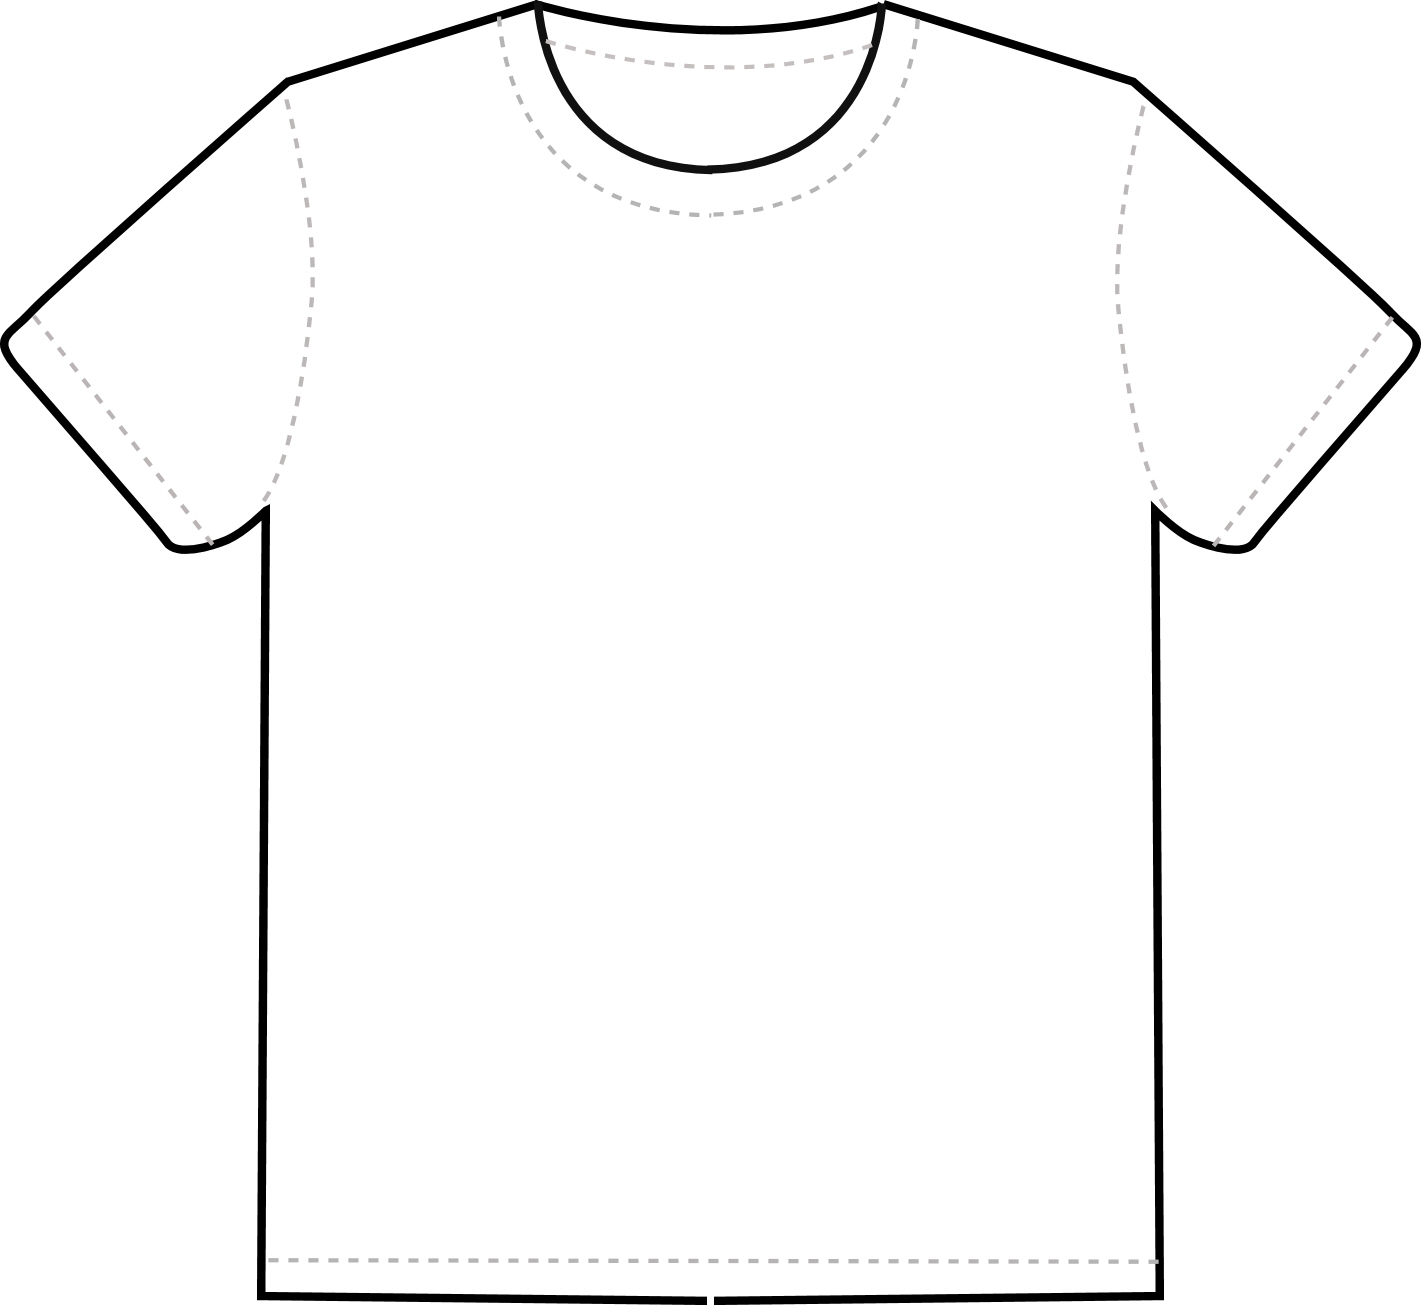 T shirt printing clipart - ClipartFox